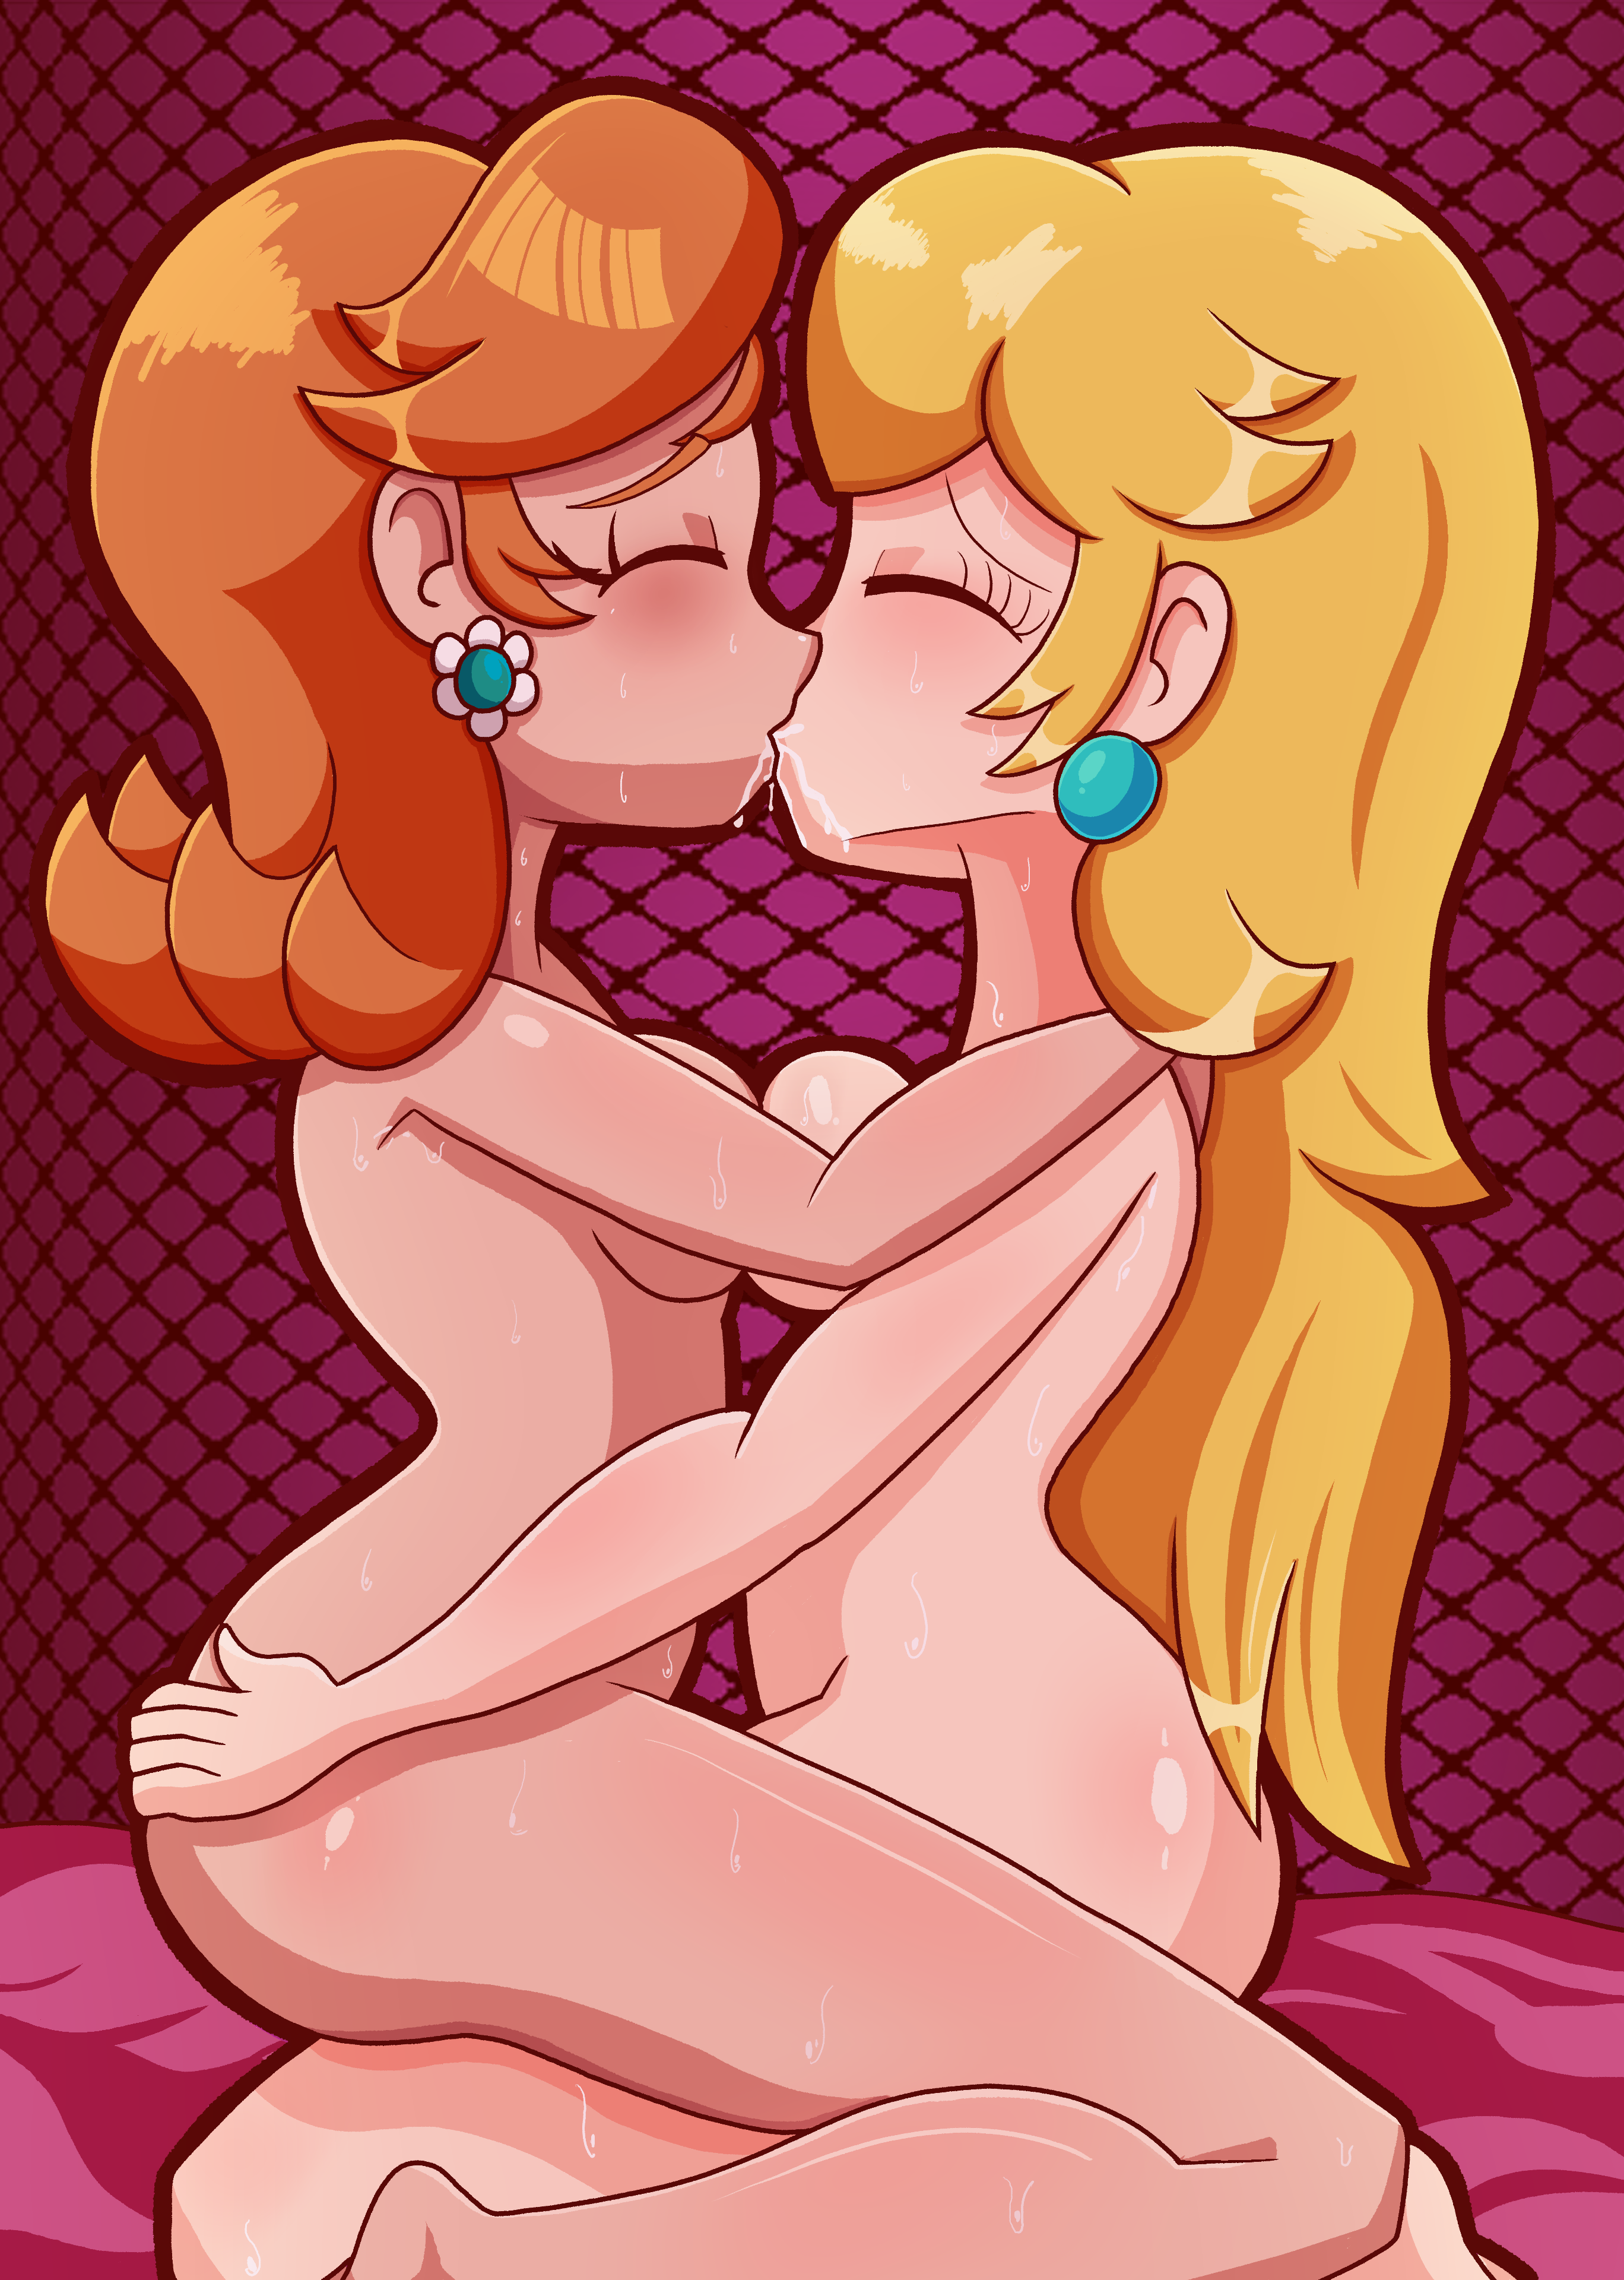 Peach and daisy lesbian porn